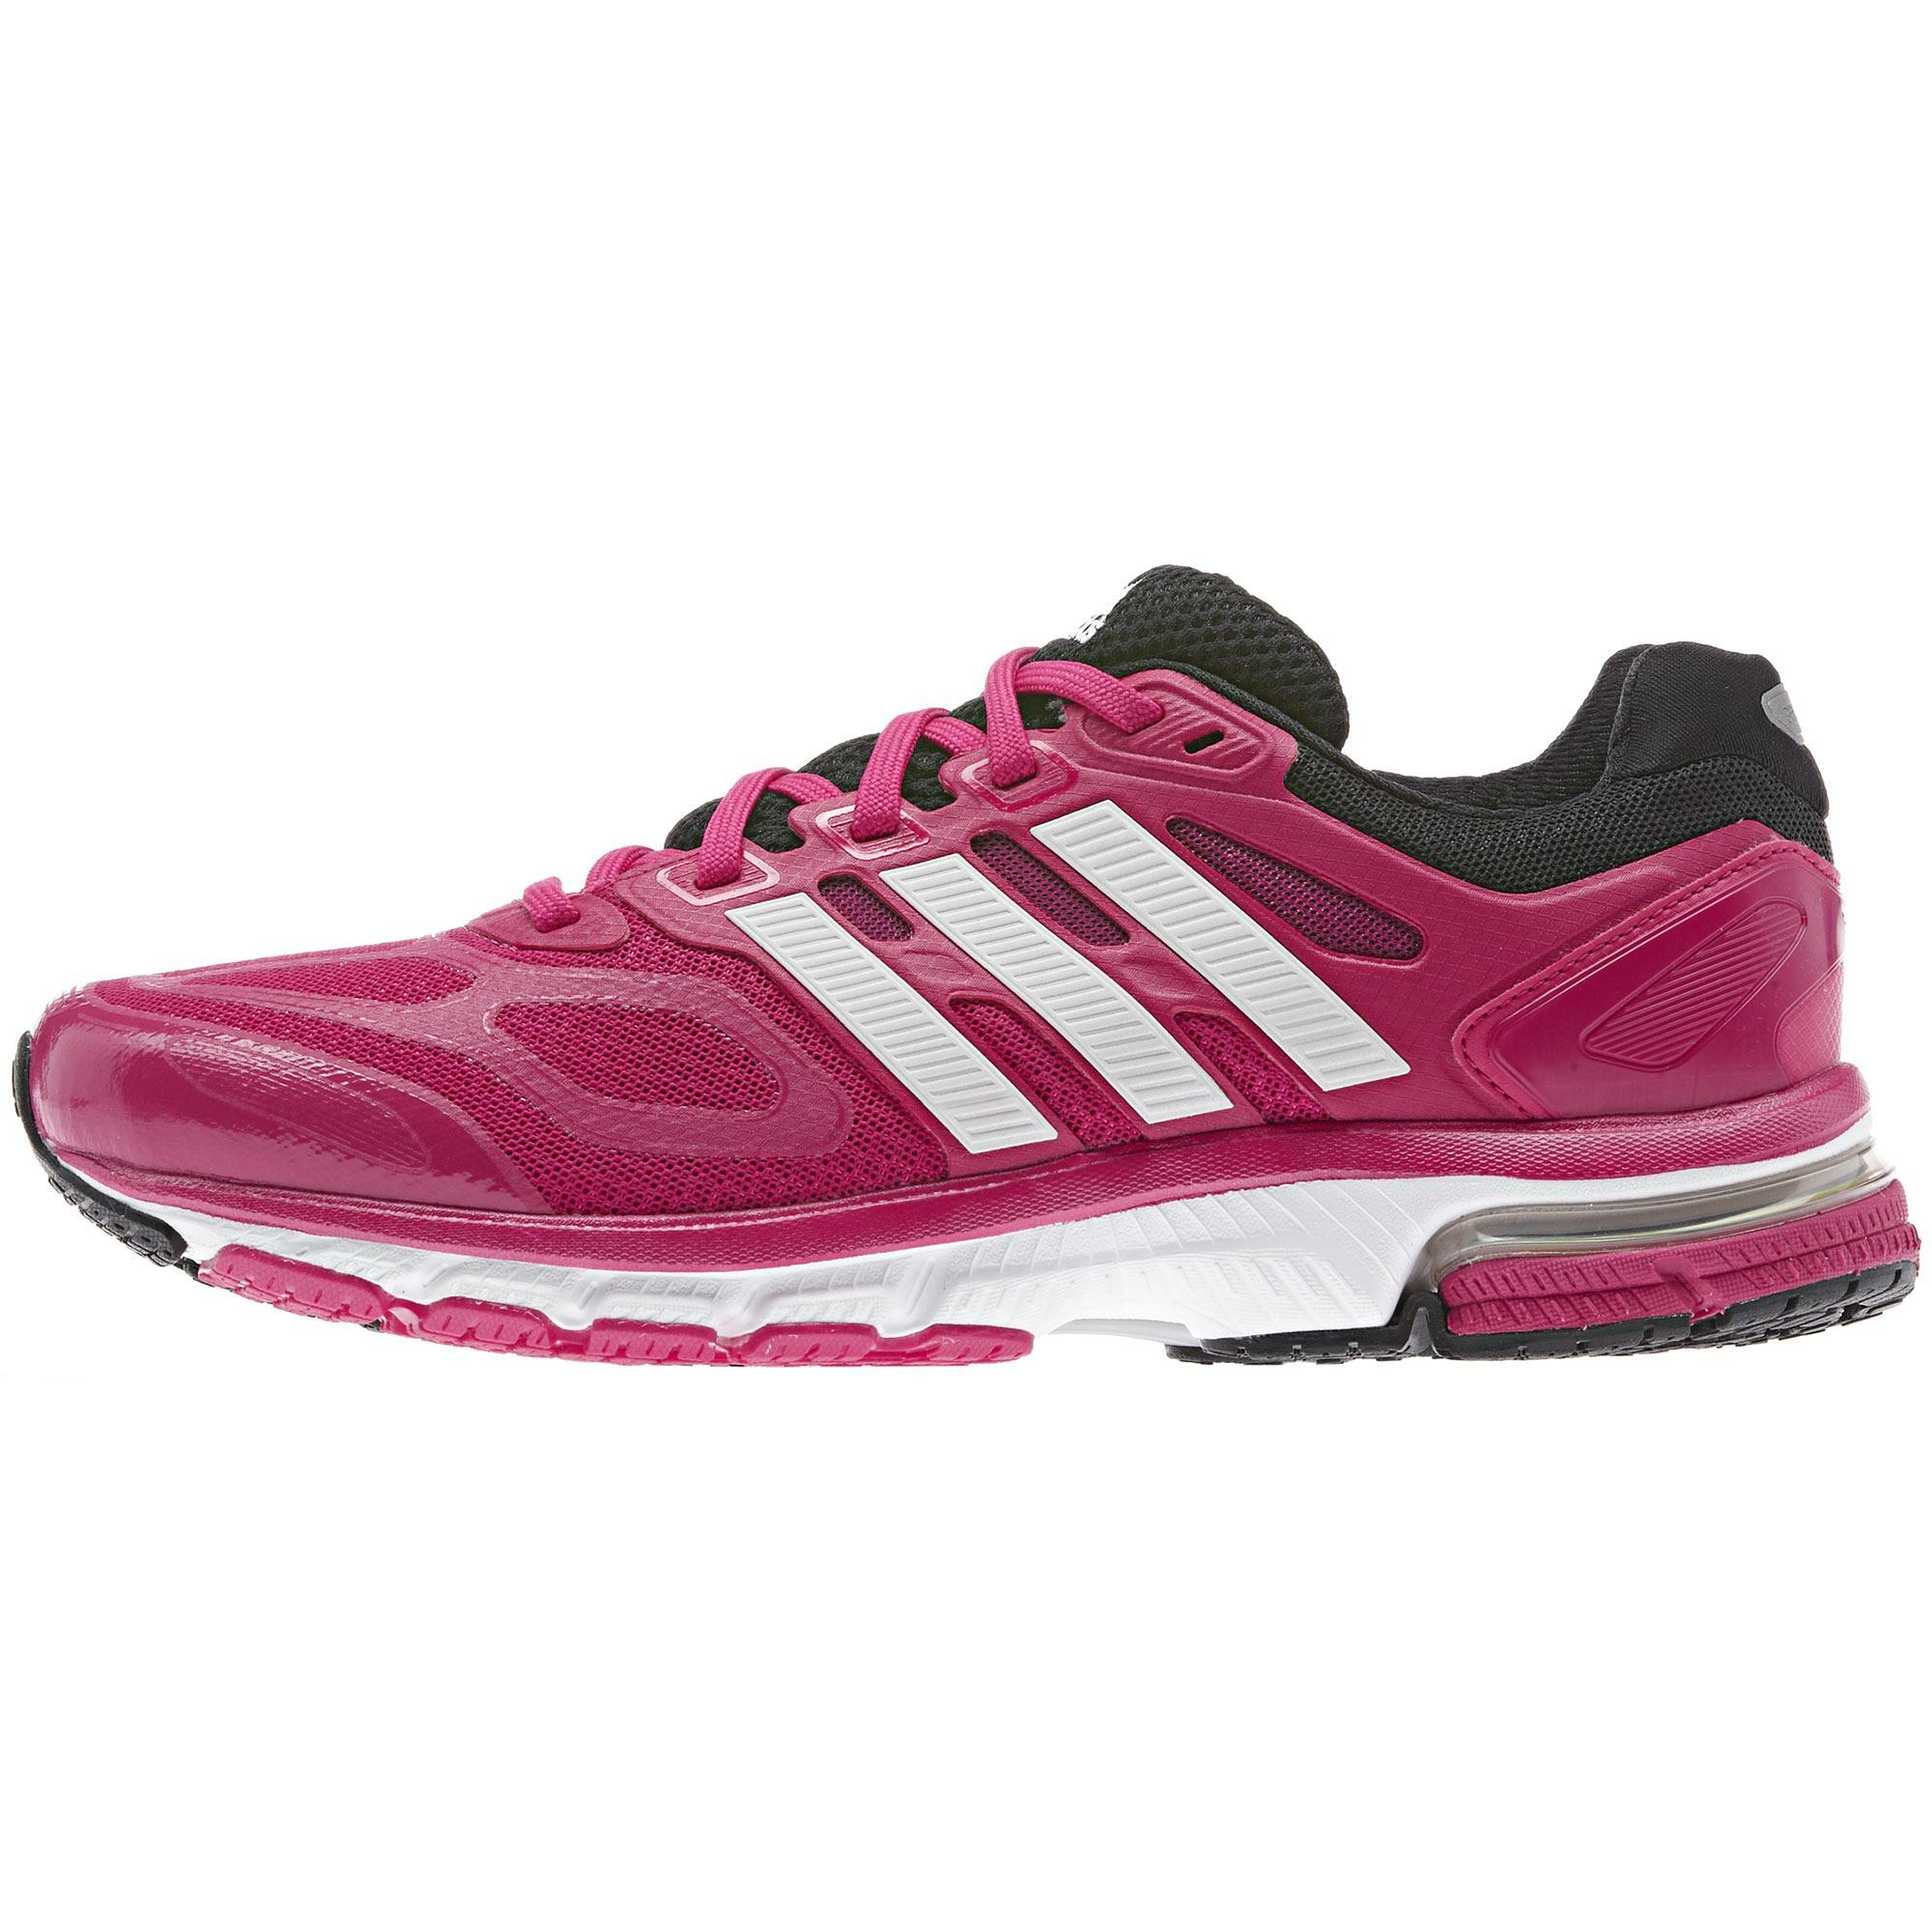 Adidas Womens Supernova Sequence Running Shoes - Pink - Tennisnuts.com